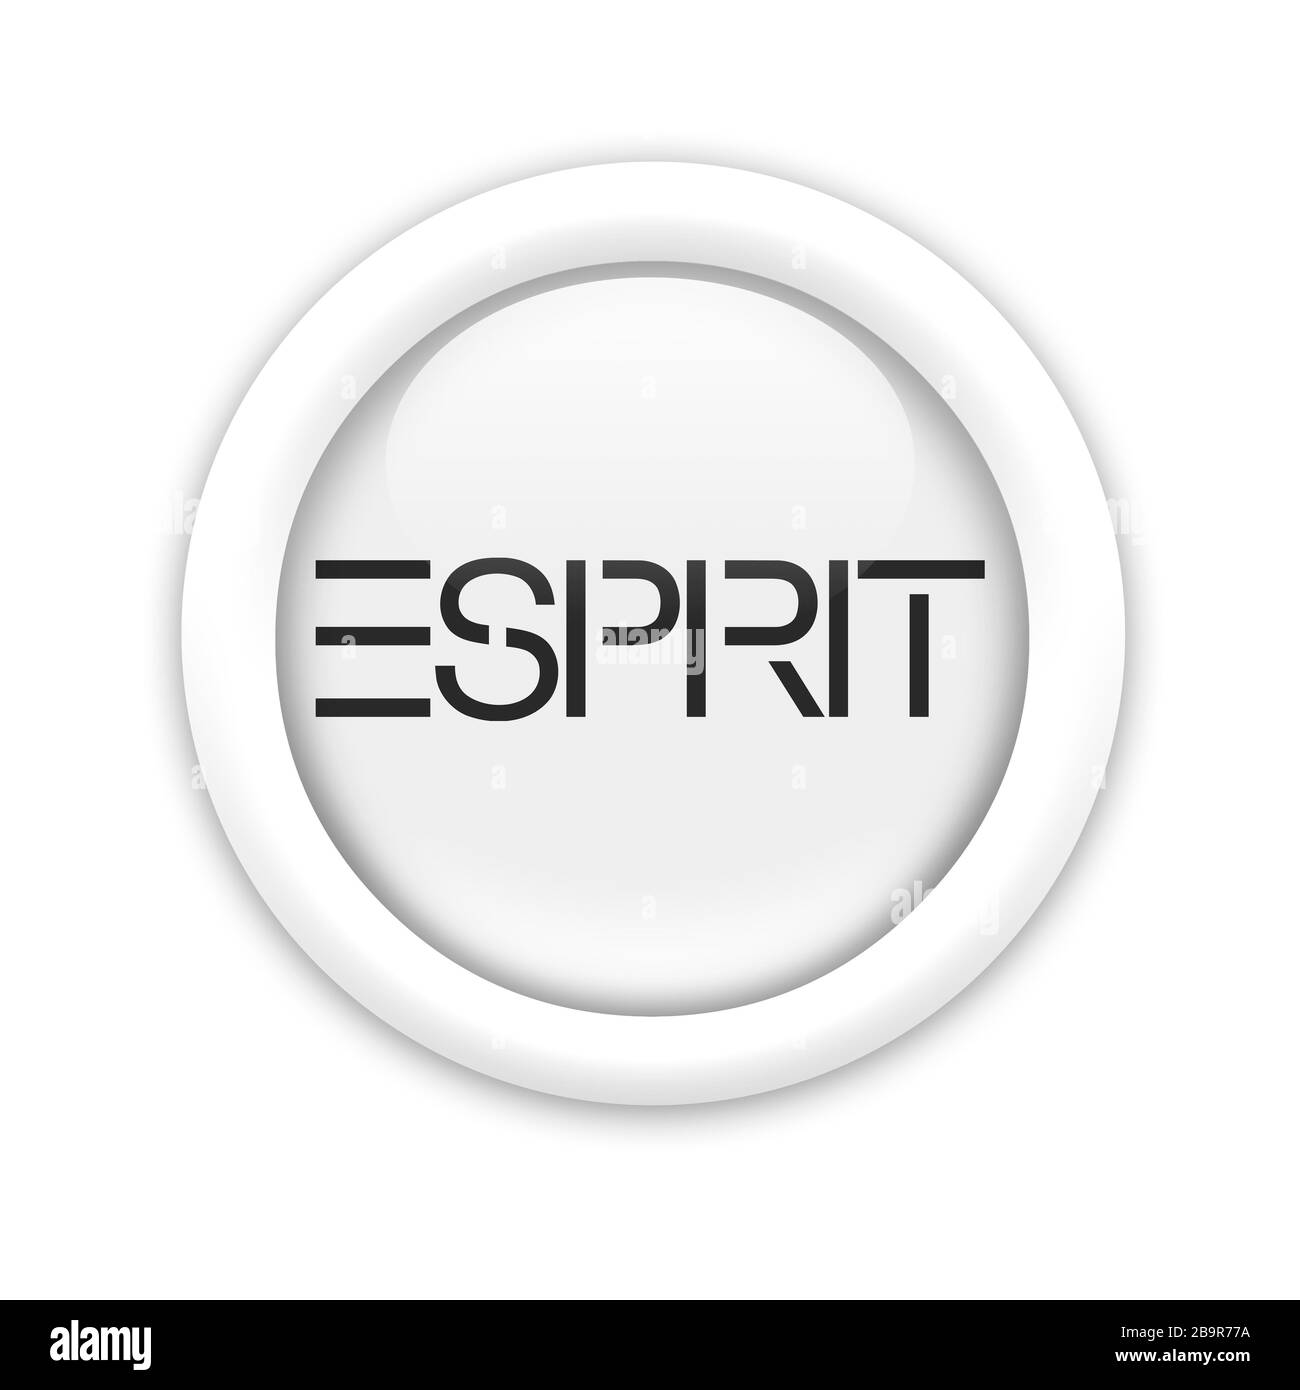 Esprit logo Black and White Stock Photos & Images - Alamy